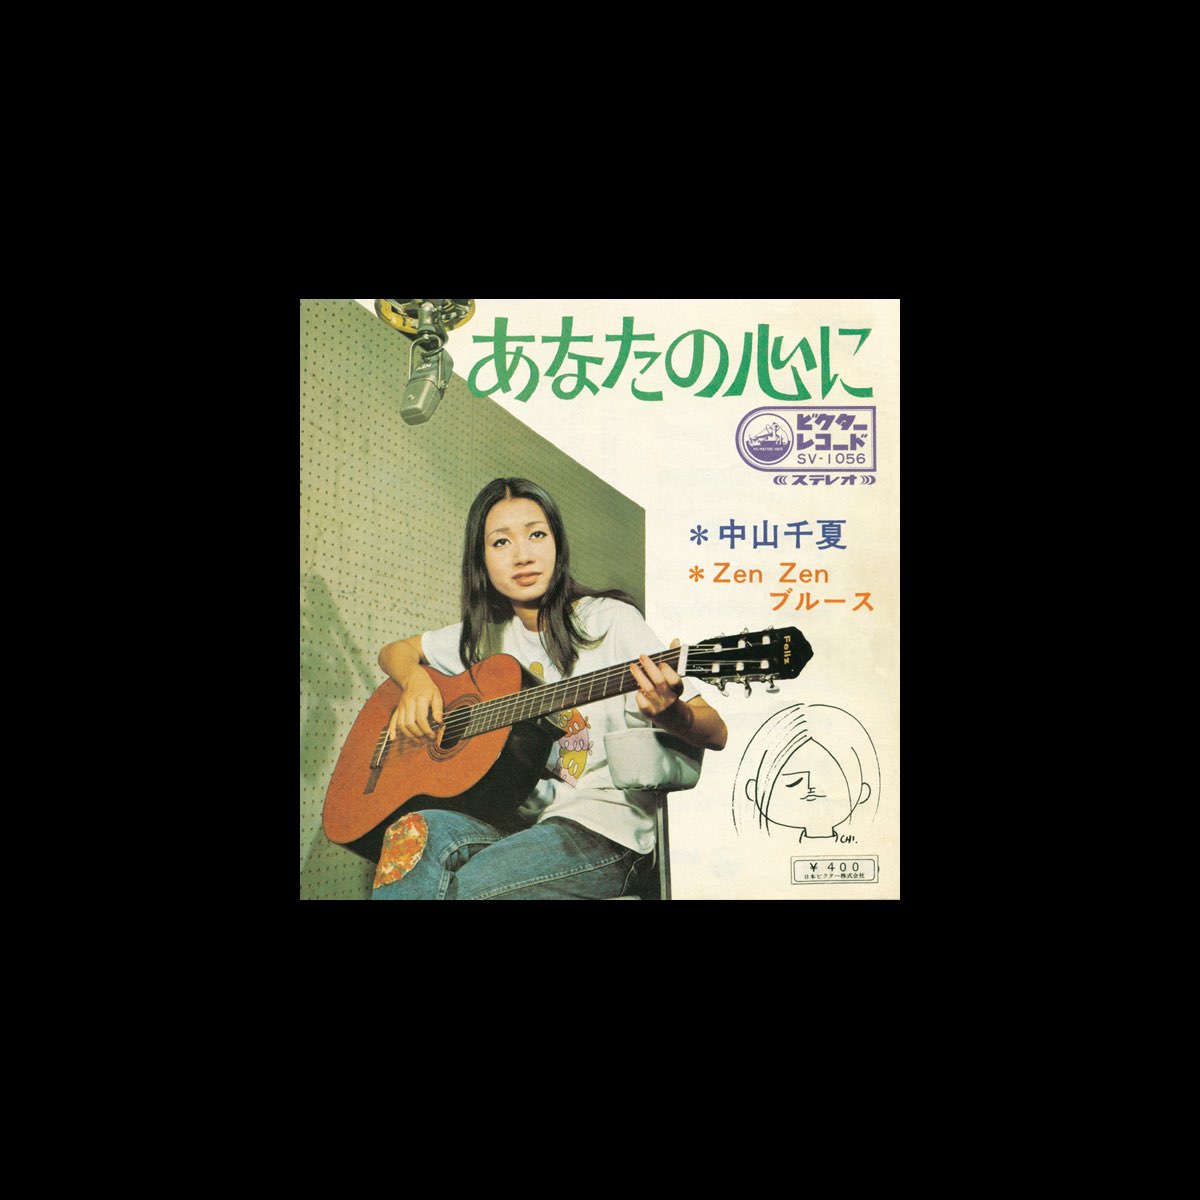 Anata no Kokoro ni(Original Cover Art) by Chinatsu Nakayama on  Music  